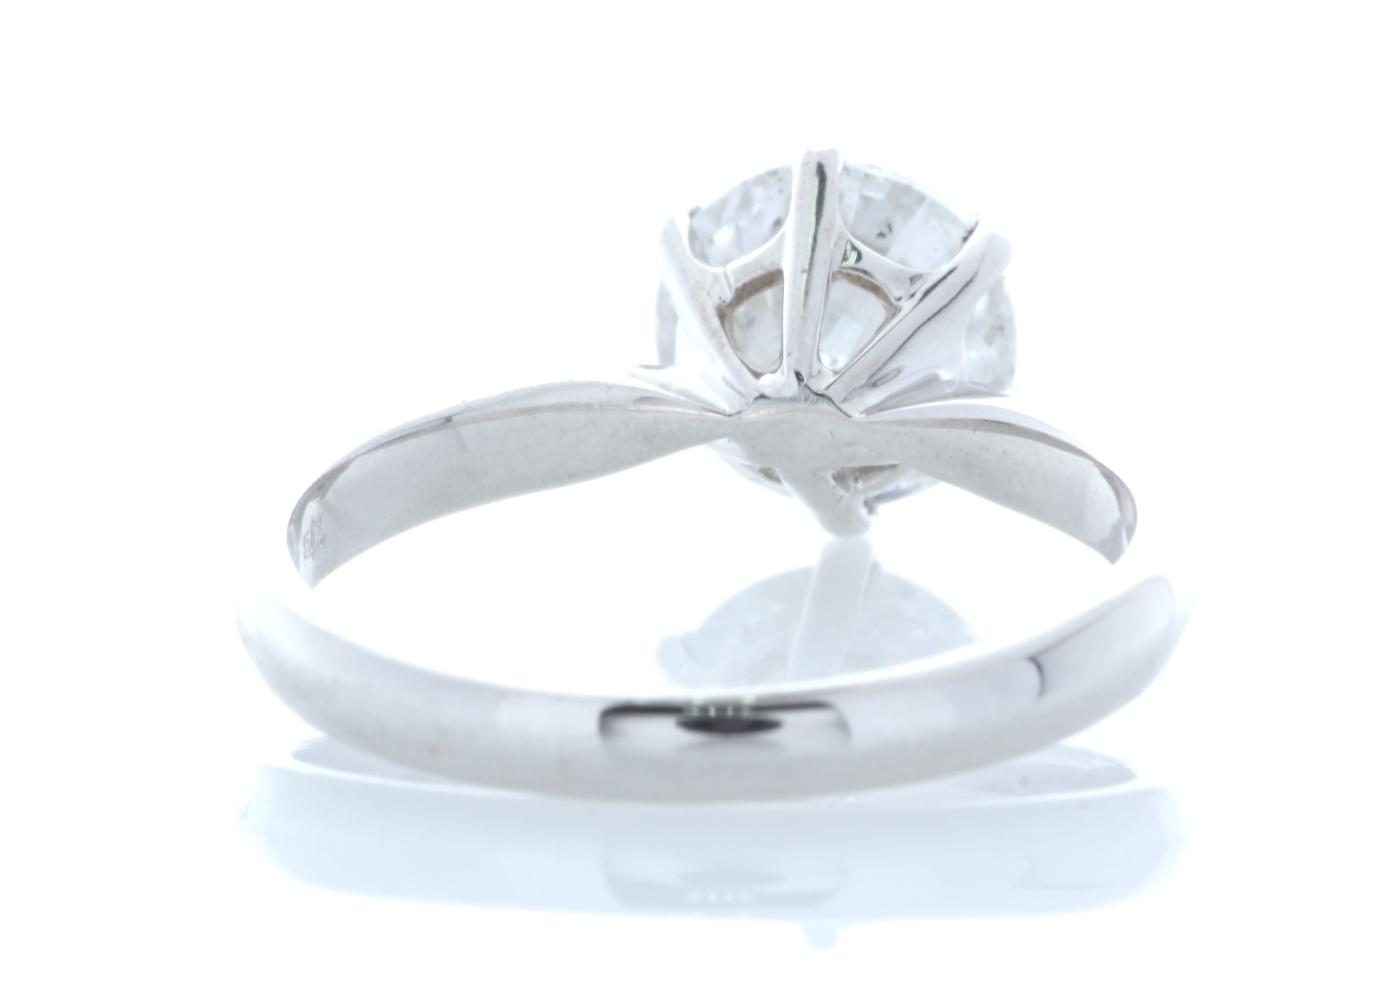 18ct White Gold Single Stone Prong Set Diamond Ring 2.01 Carats - Image 2 of 4